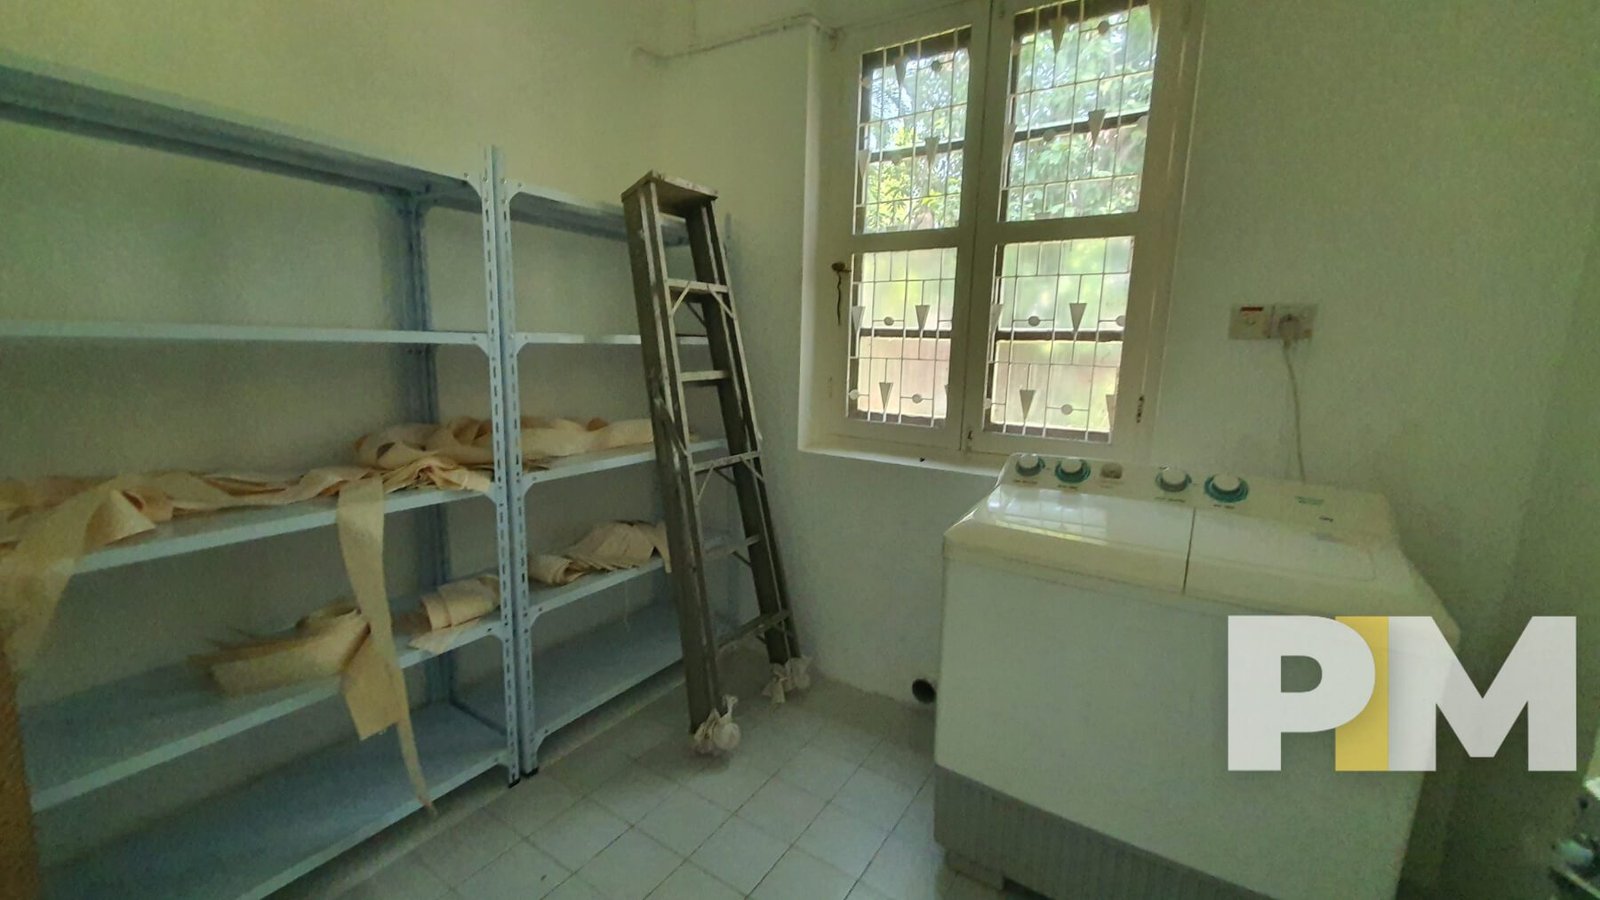 laundry room with washing machine - Yangon Real Estate